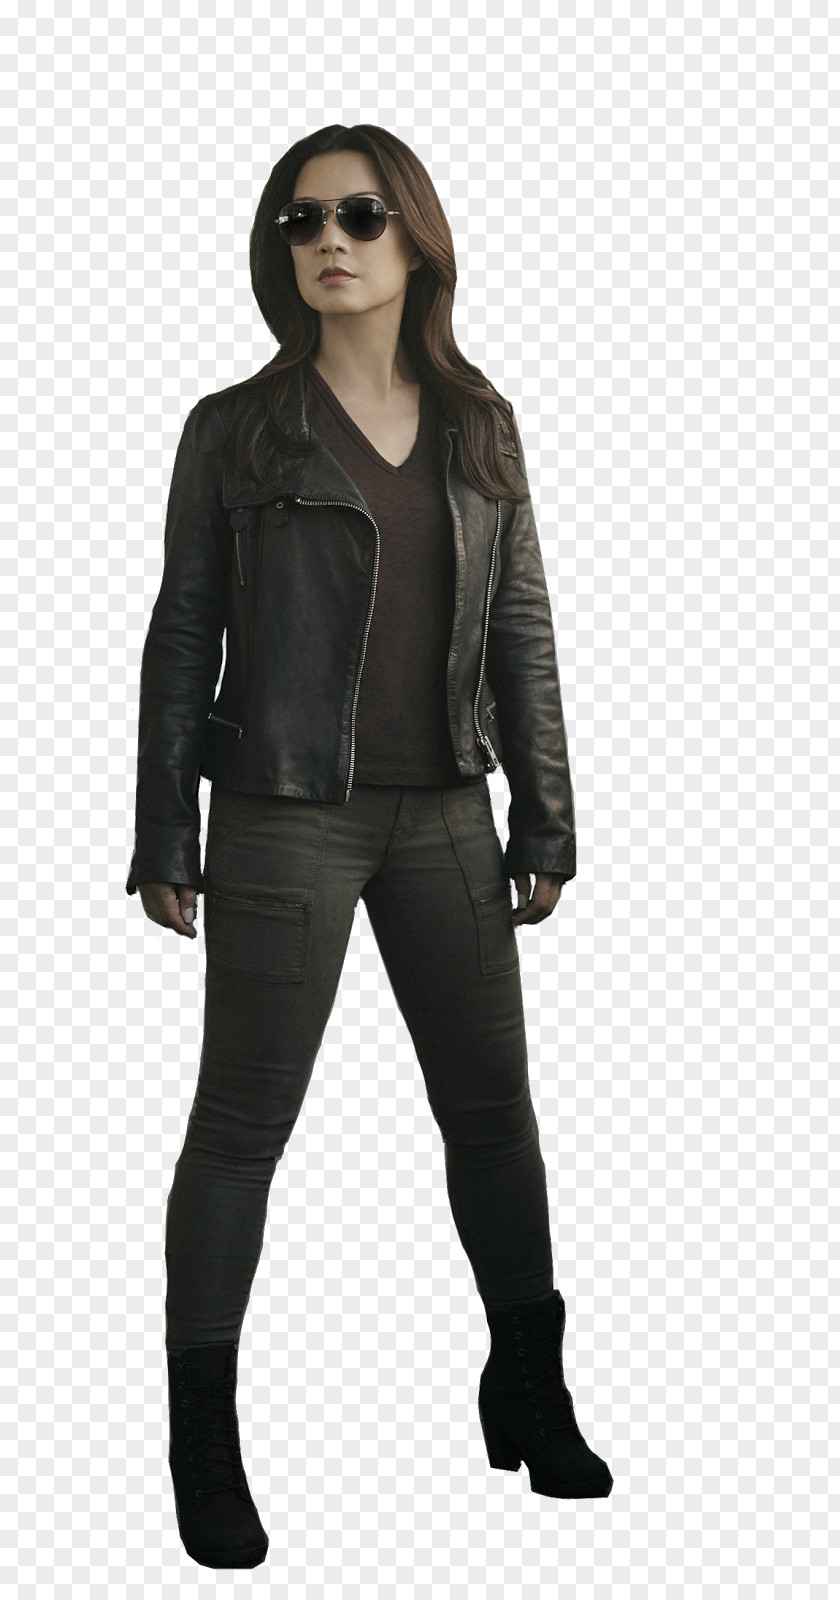 Chloe Bennet Daisy Johnson Yo-Yo Rodriguez Agents Of S.H.I.E.L.D. Phil Coulson PNG